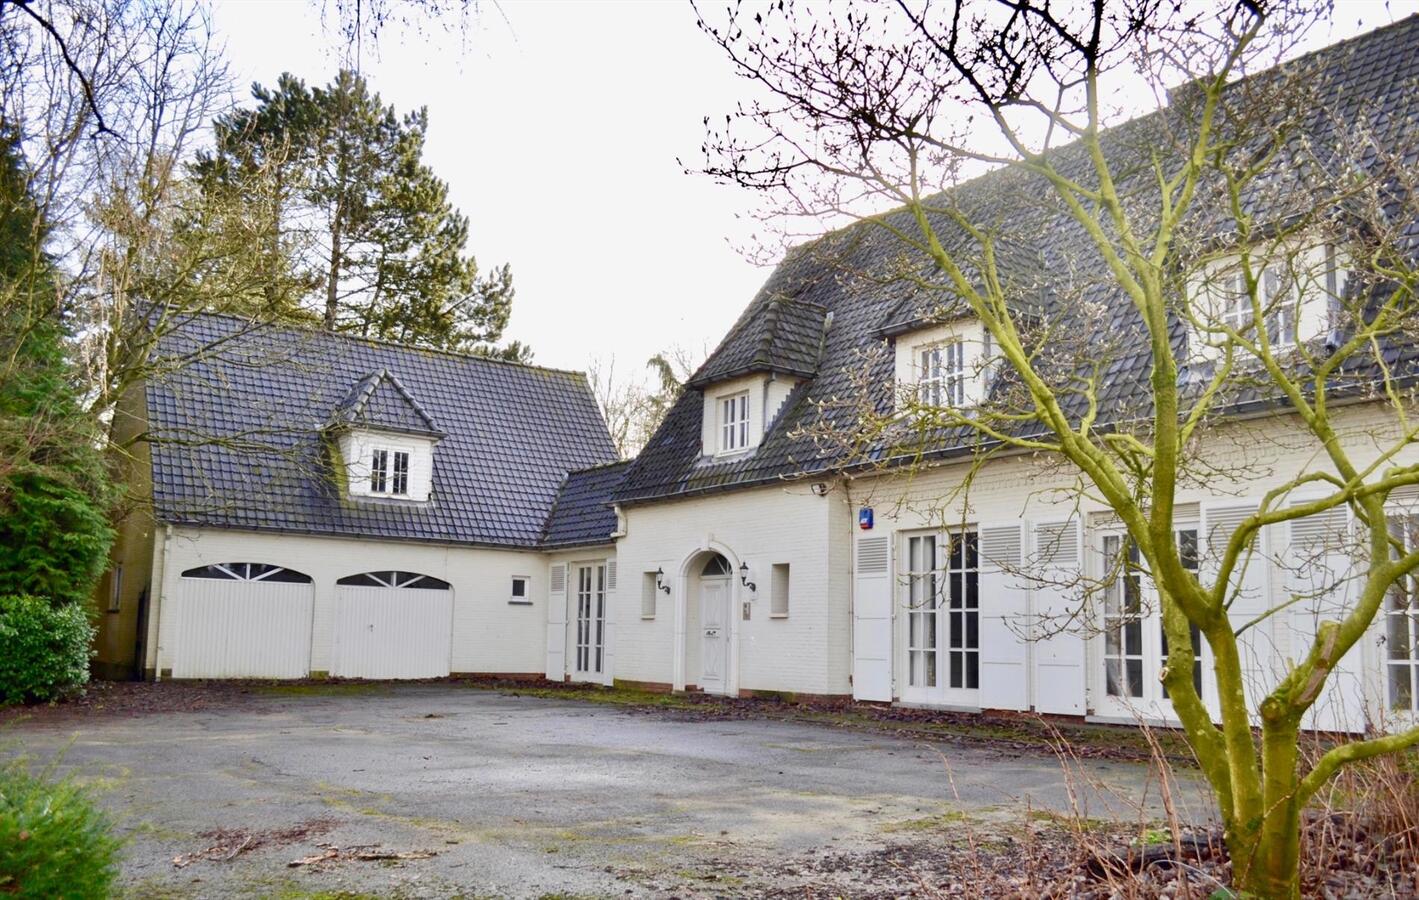 Property sold in Sint-Niklaas